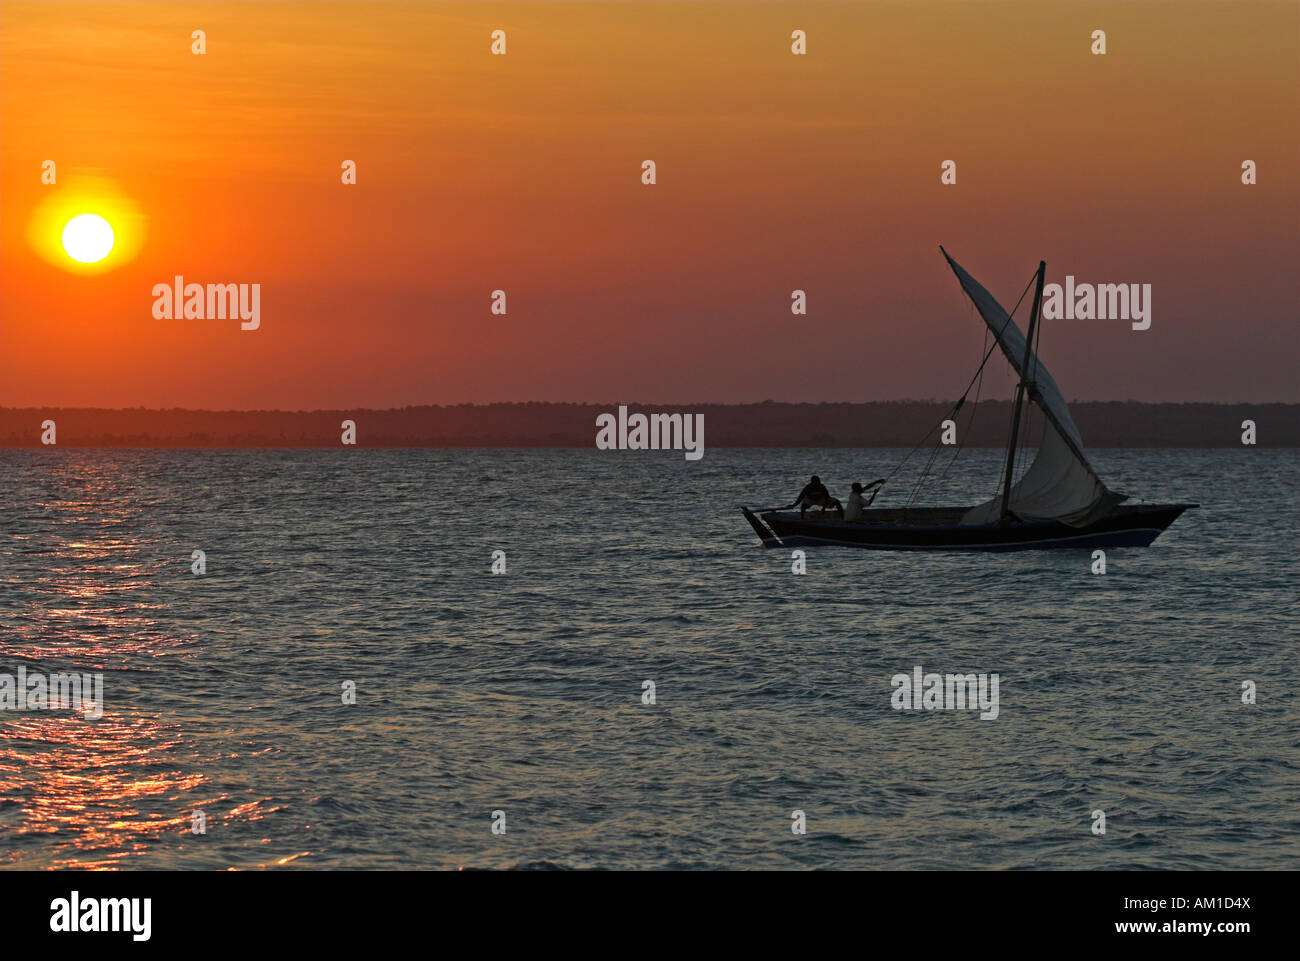 Dhau am Indischen Ozean, Quirimbas Inseln, Mosambik, Afrika Stockfoto